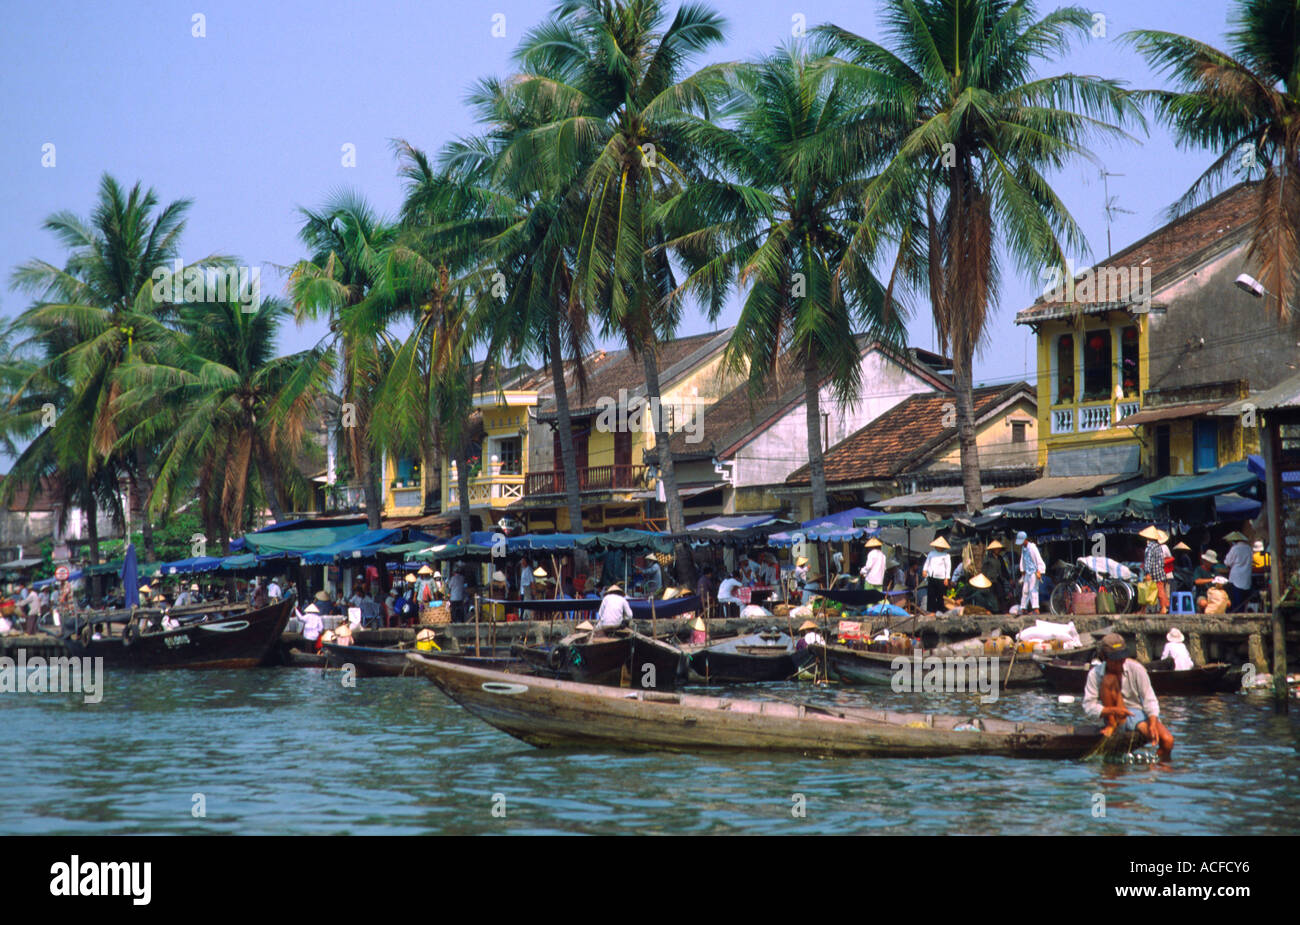 Hoi An floating market Stock Photo